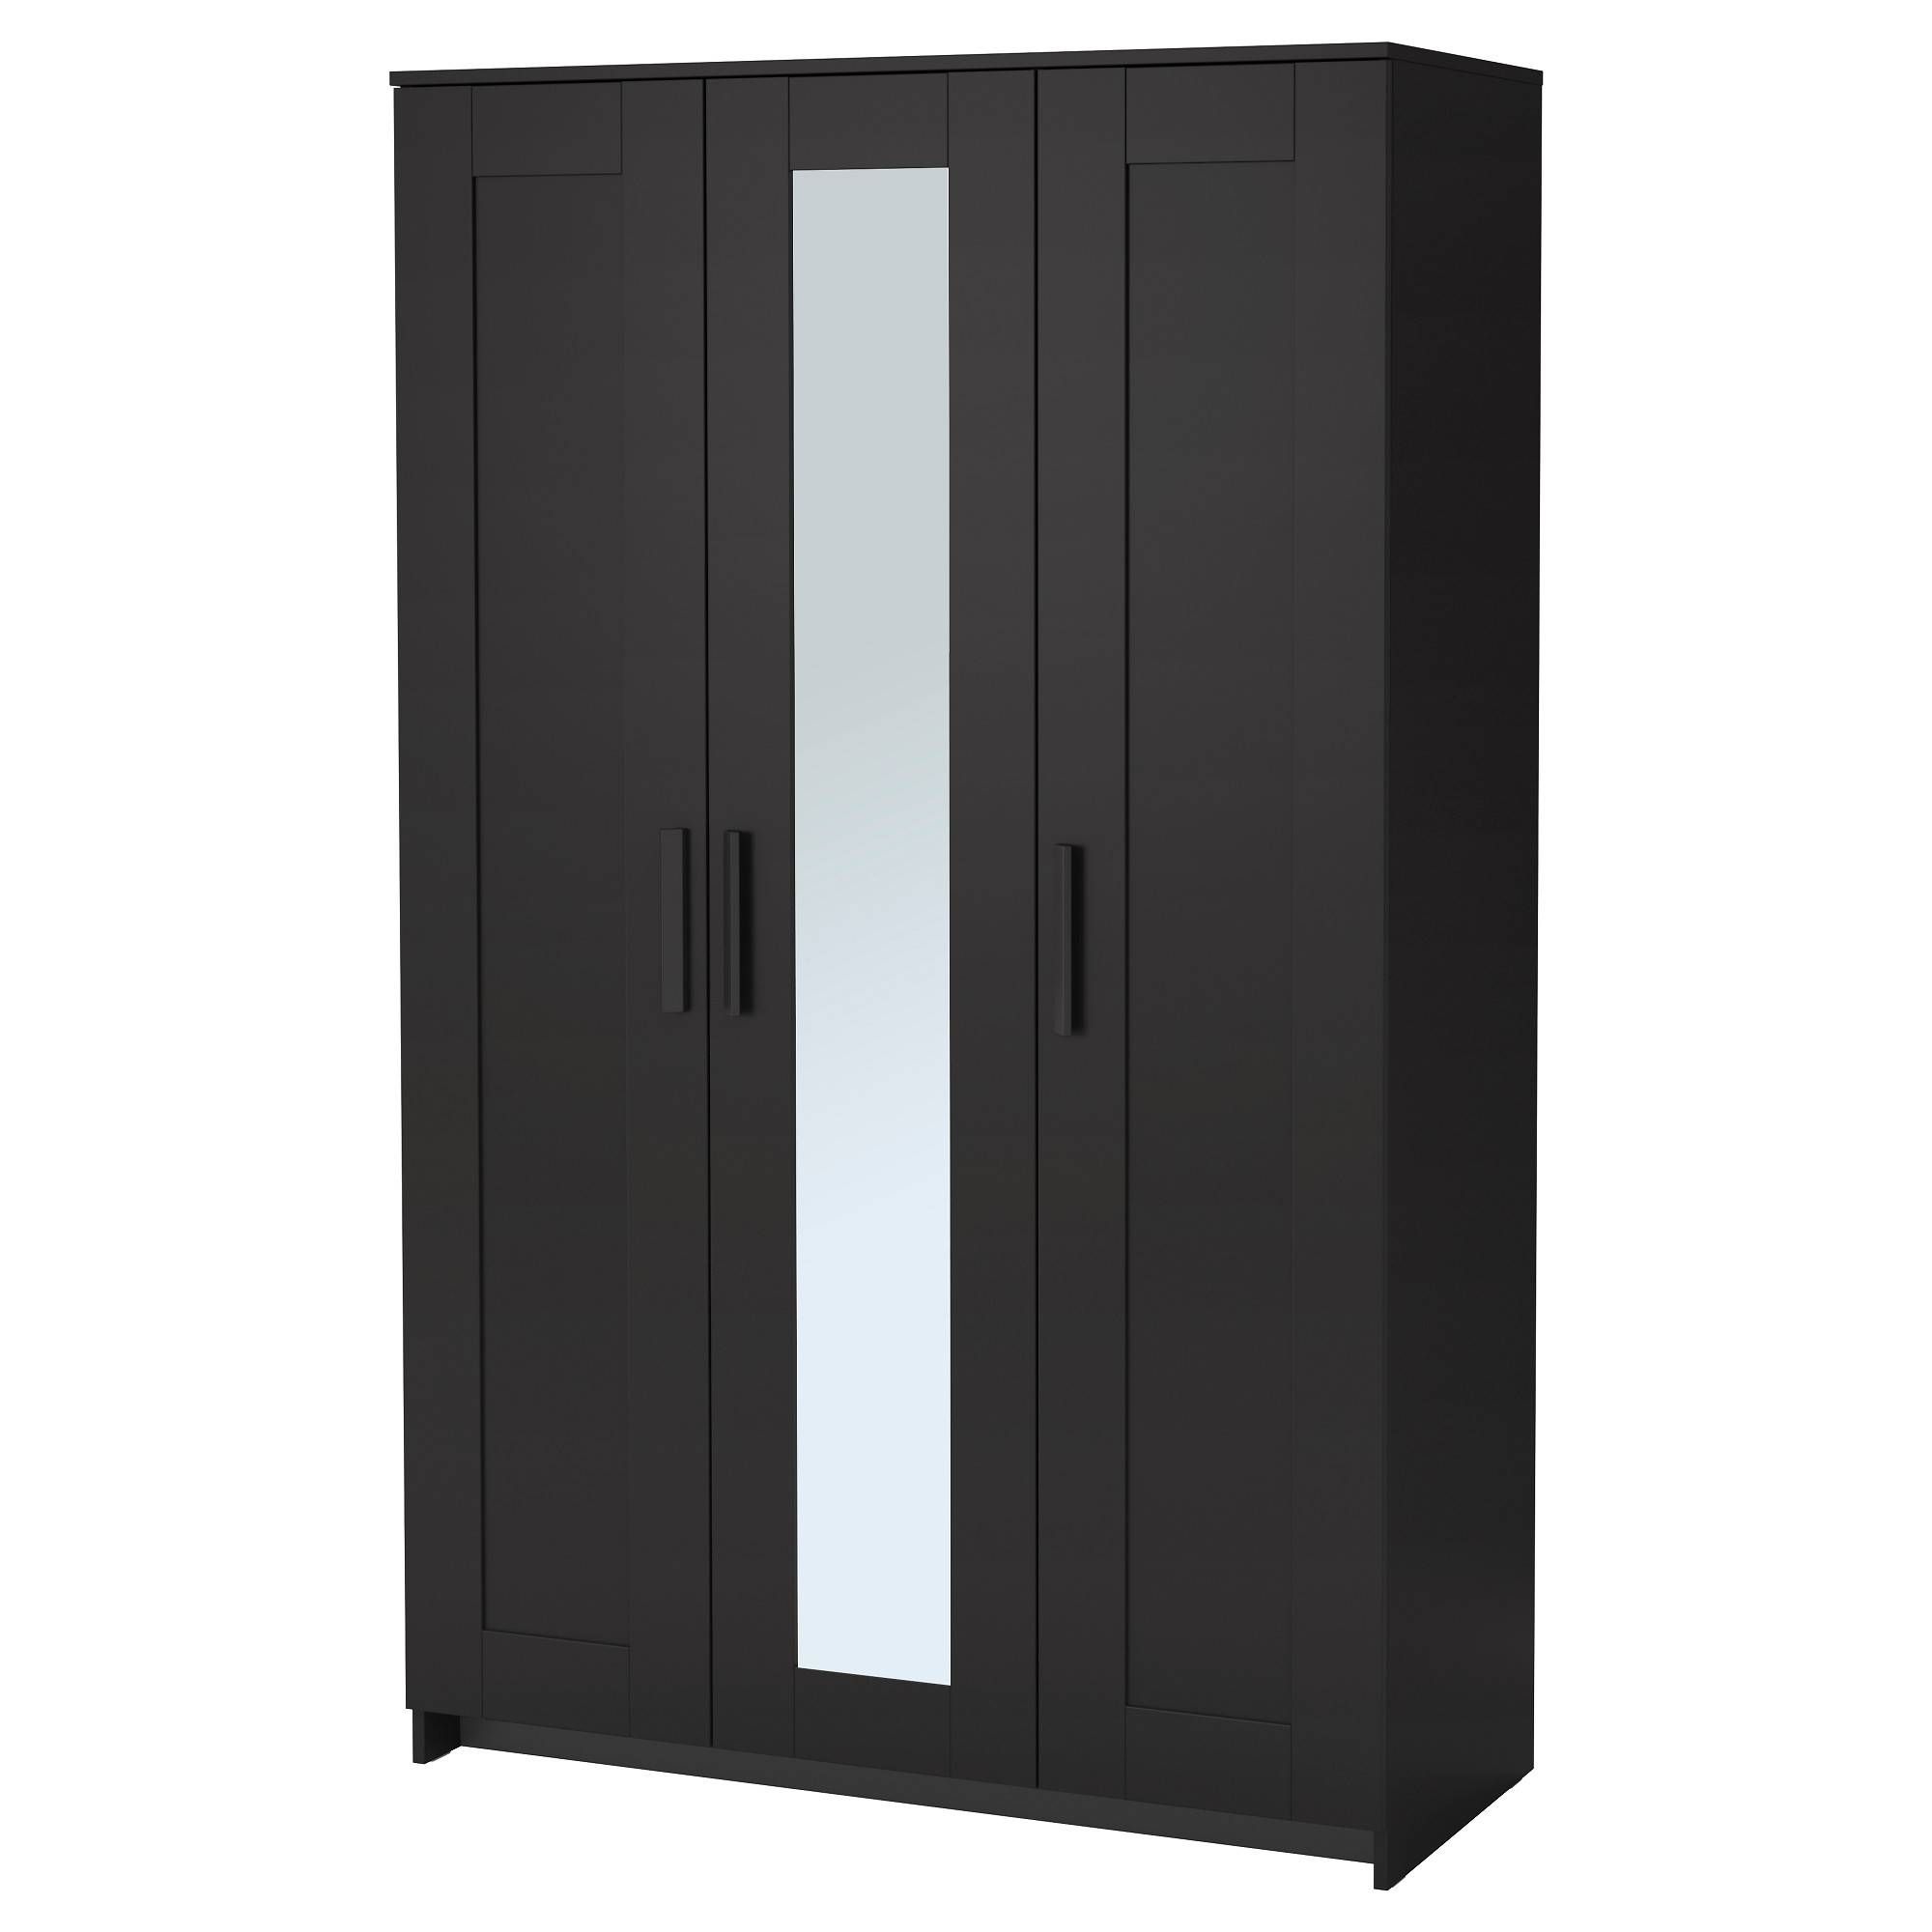 Brimnes Wardrobe With 3 Doors – Black – Ikea With Dark Wood Wardrobe Cheap (View 13 of 30)